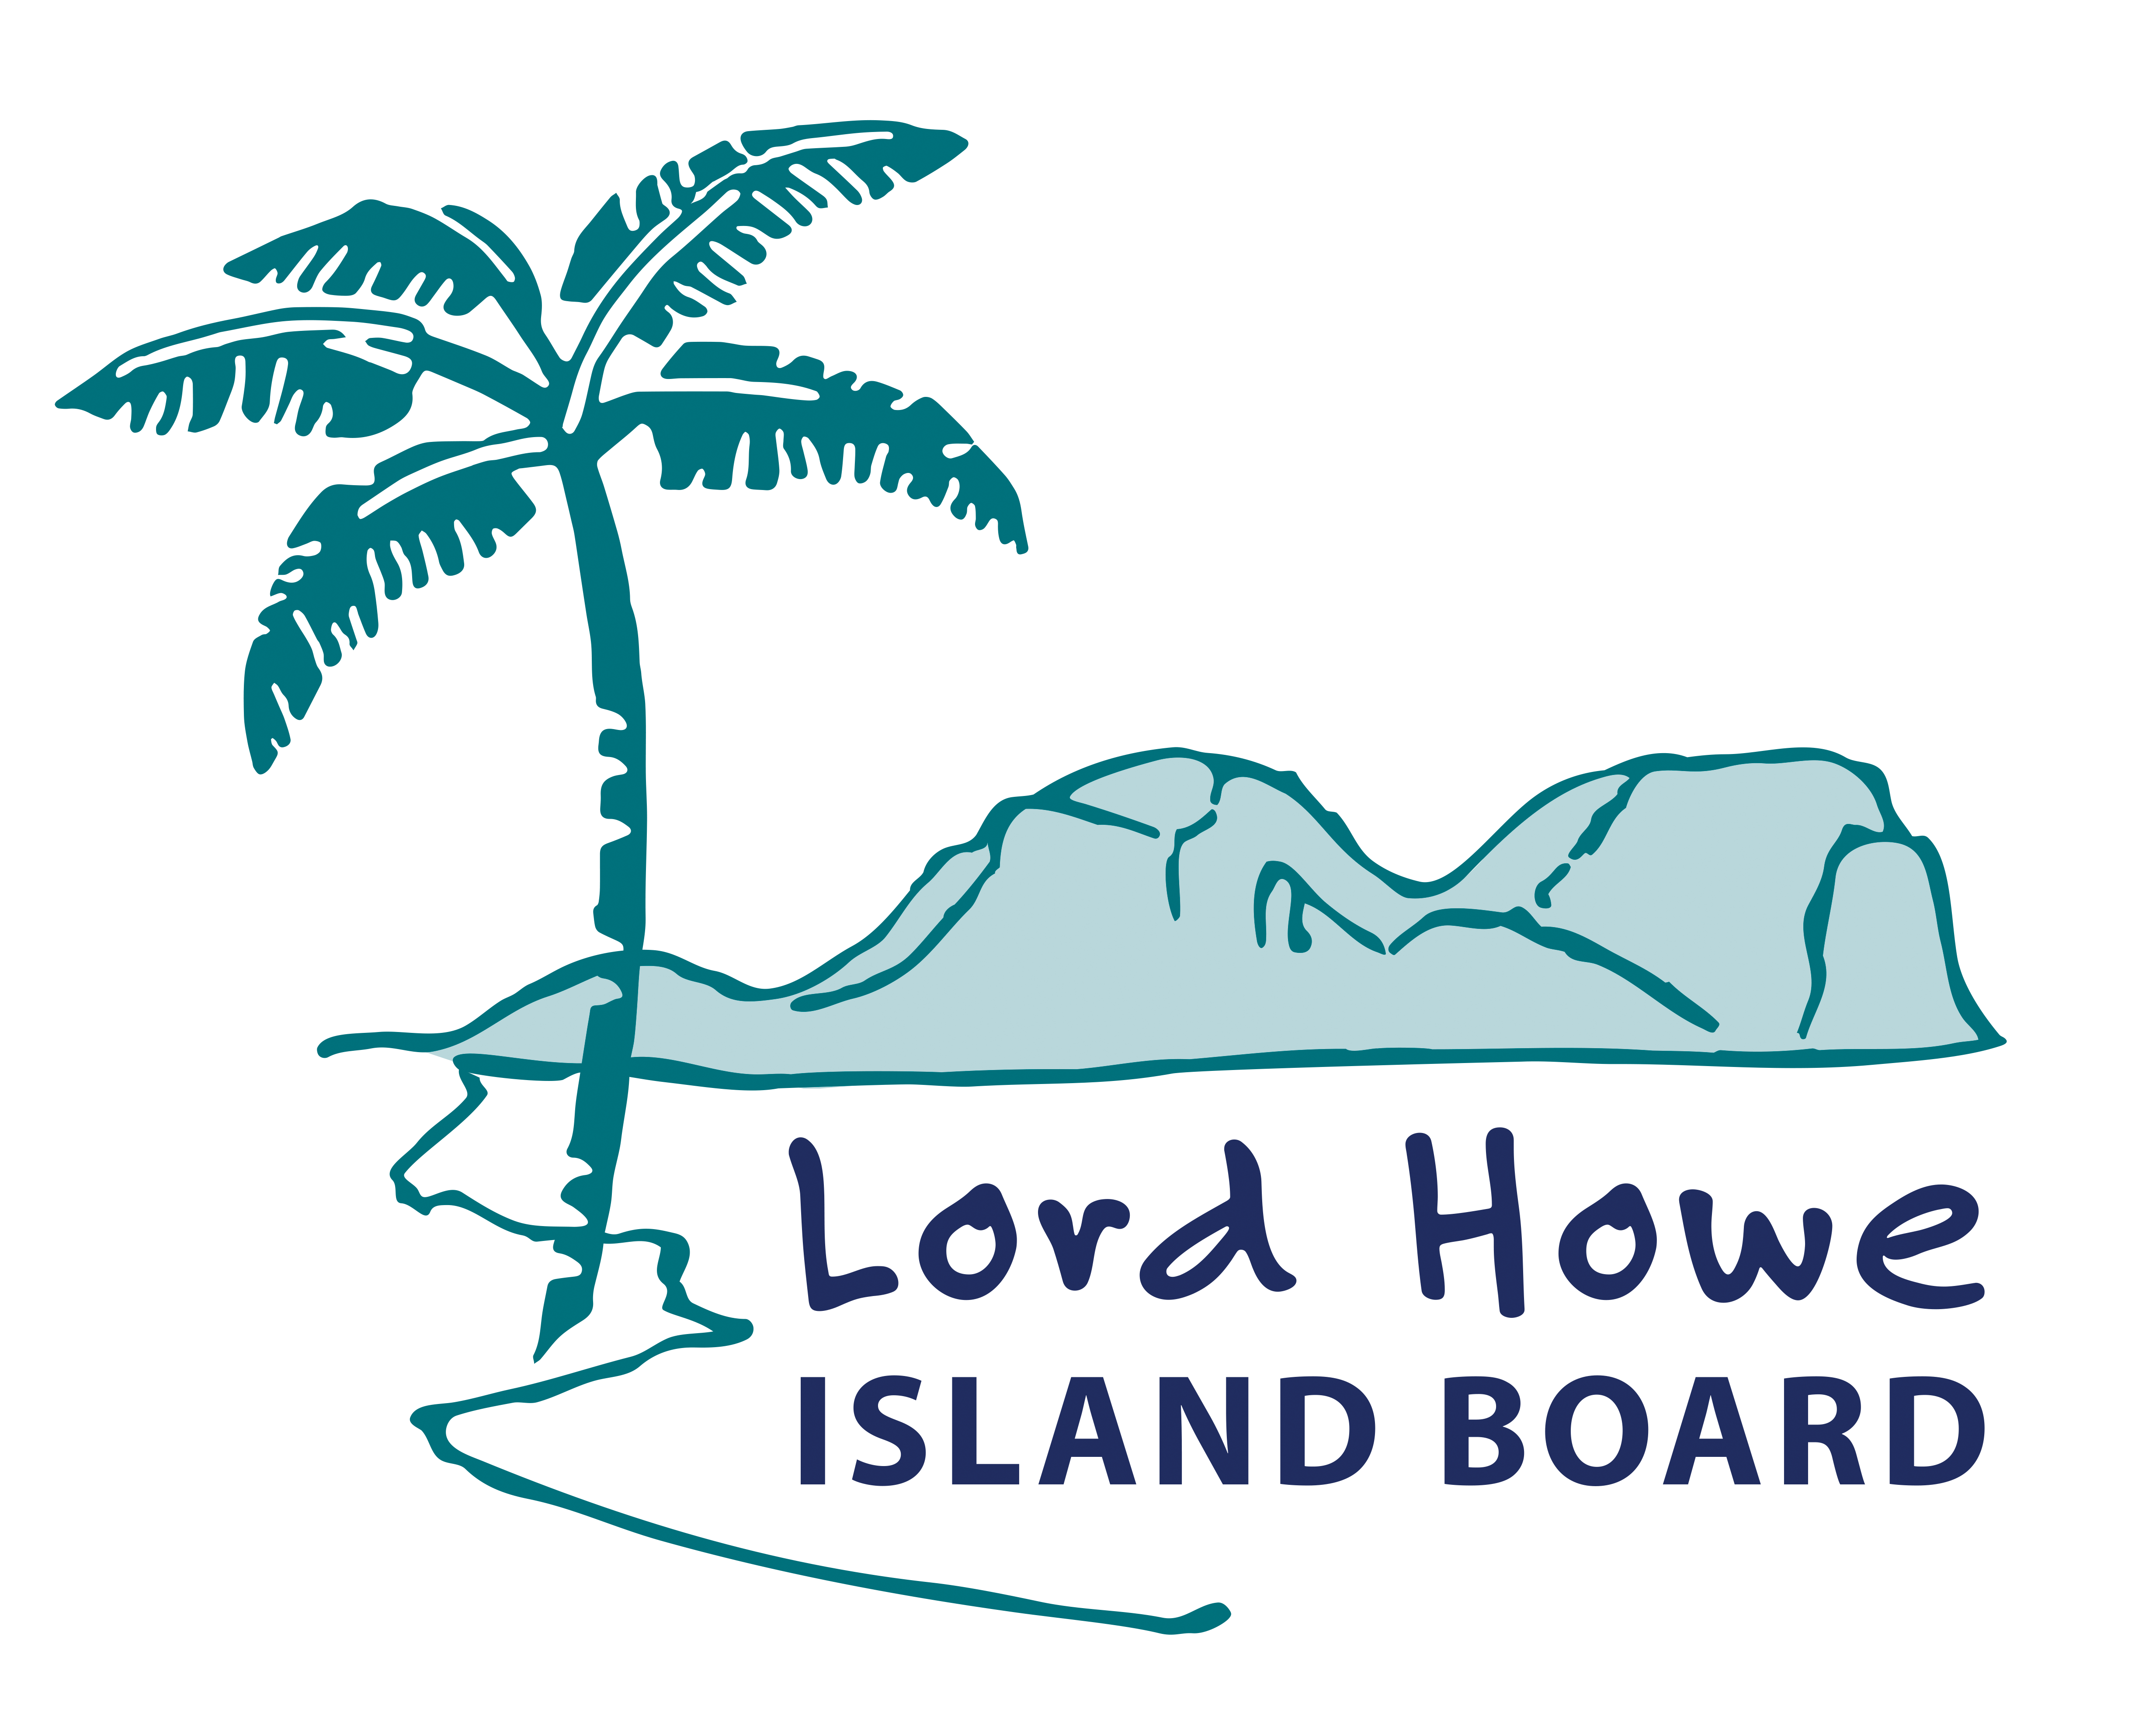 lord-howe-island-board